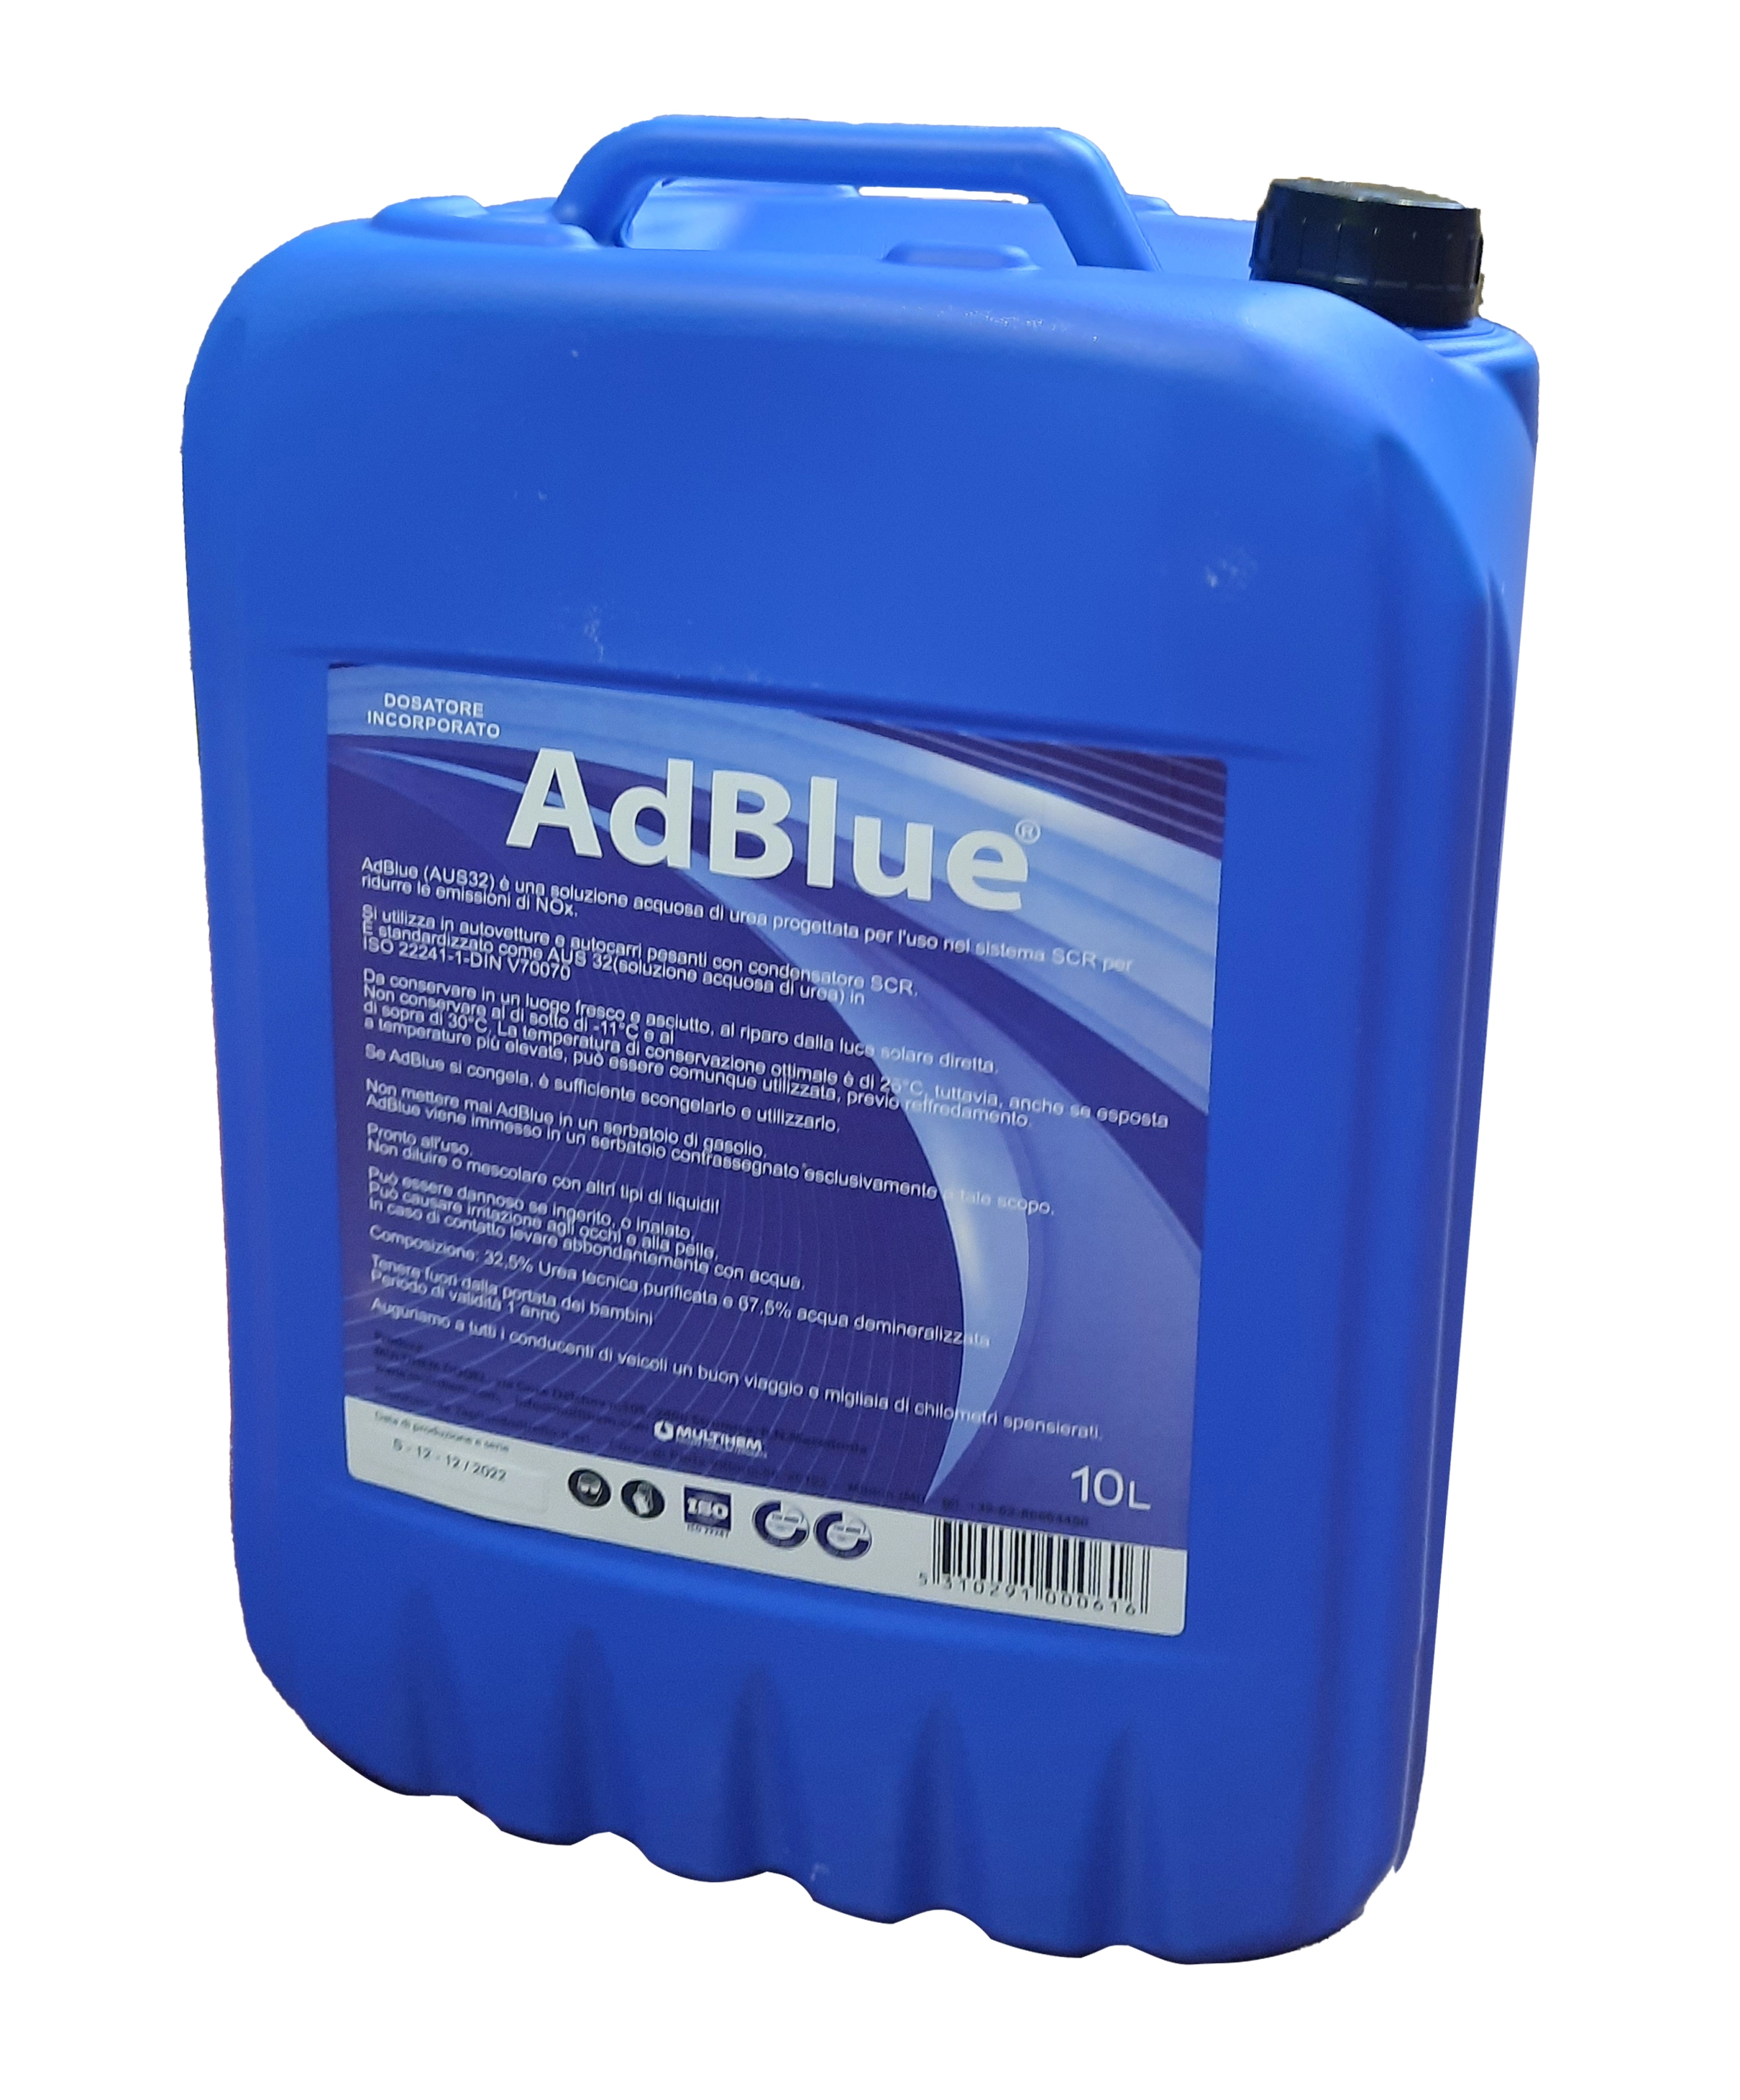 Adblue kaufen bei OBI